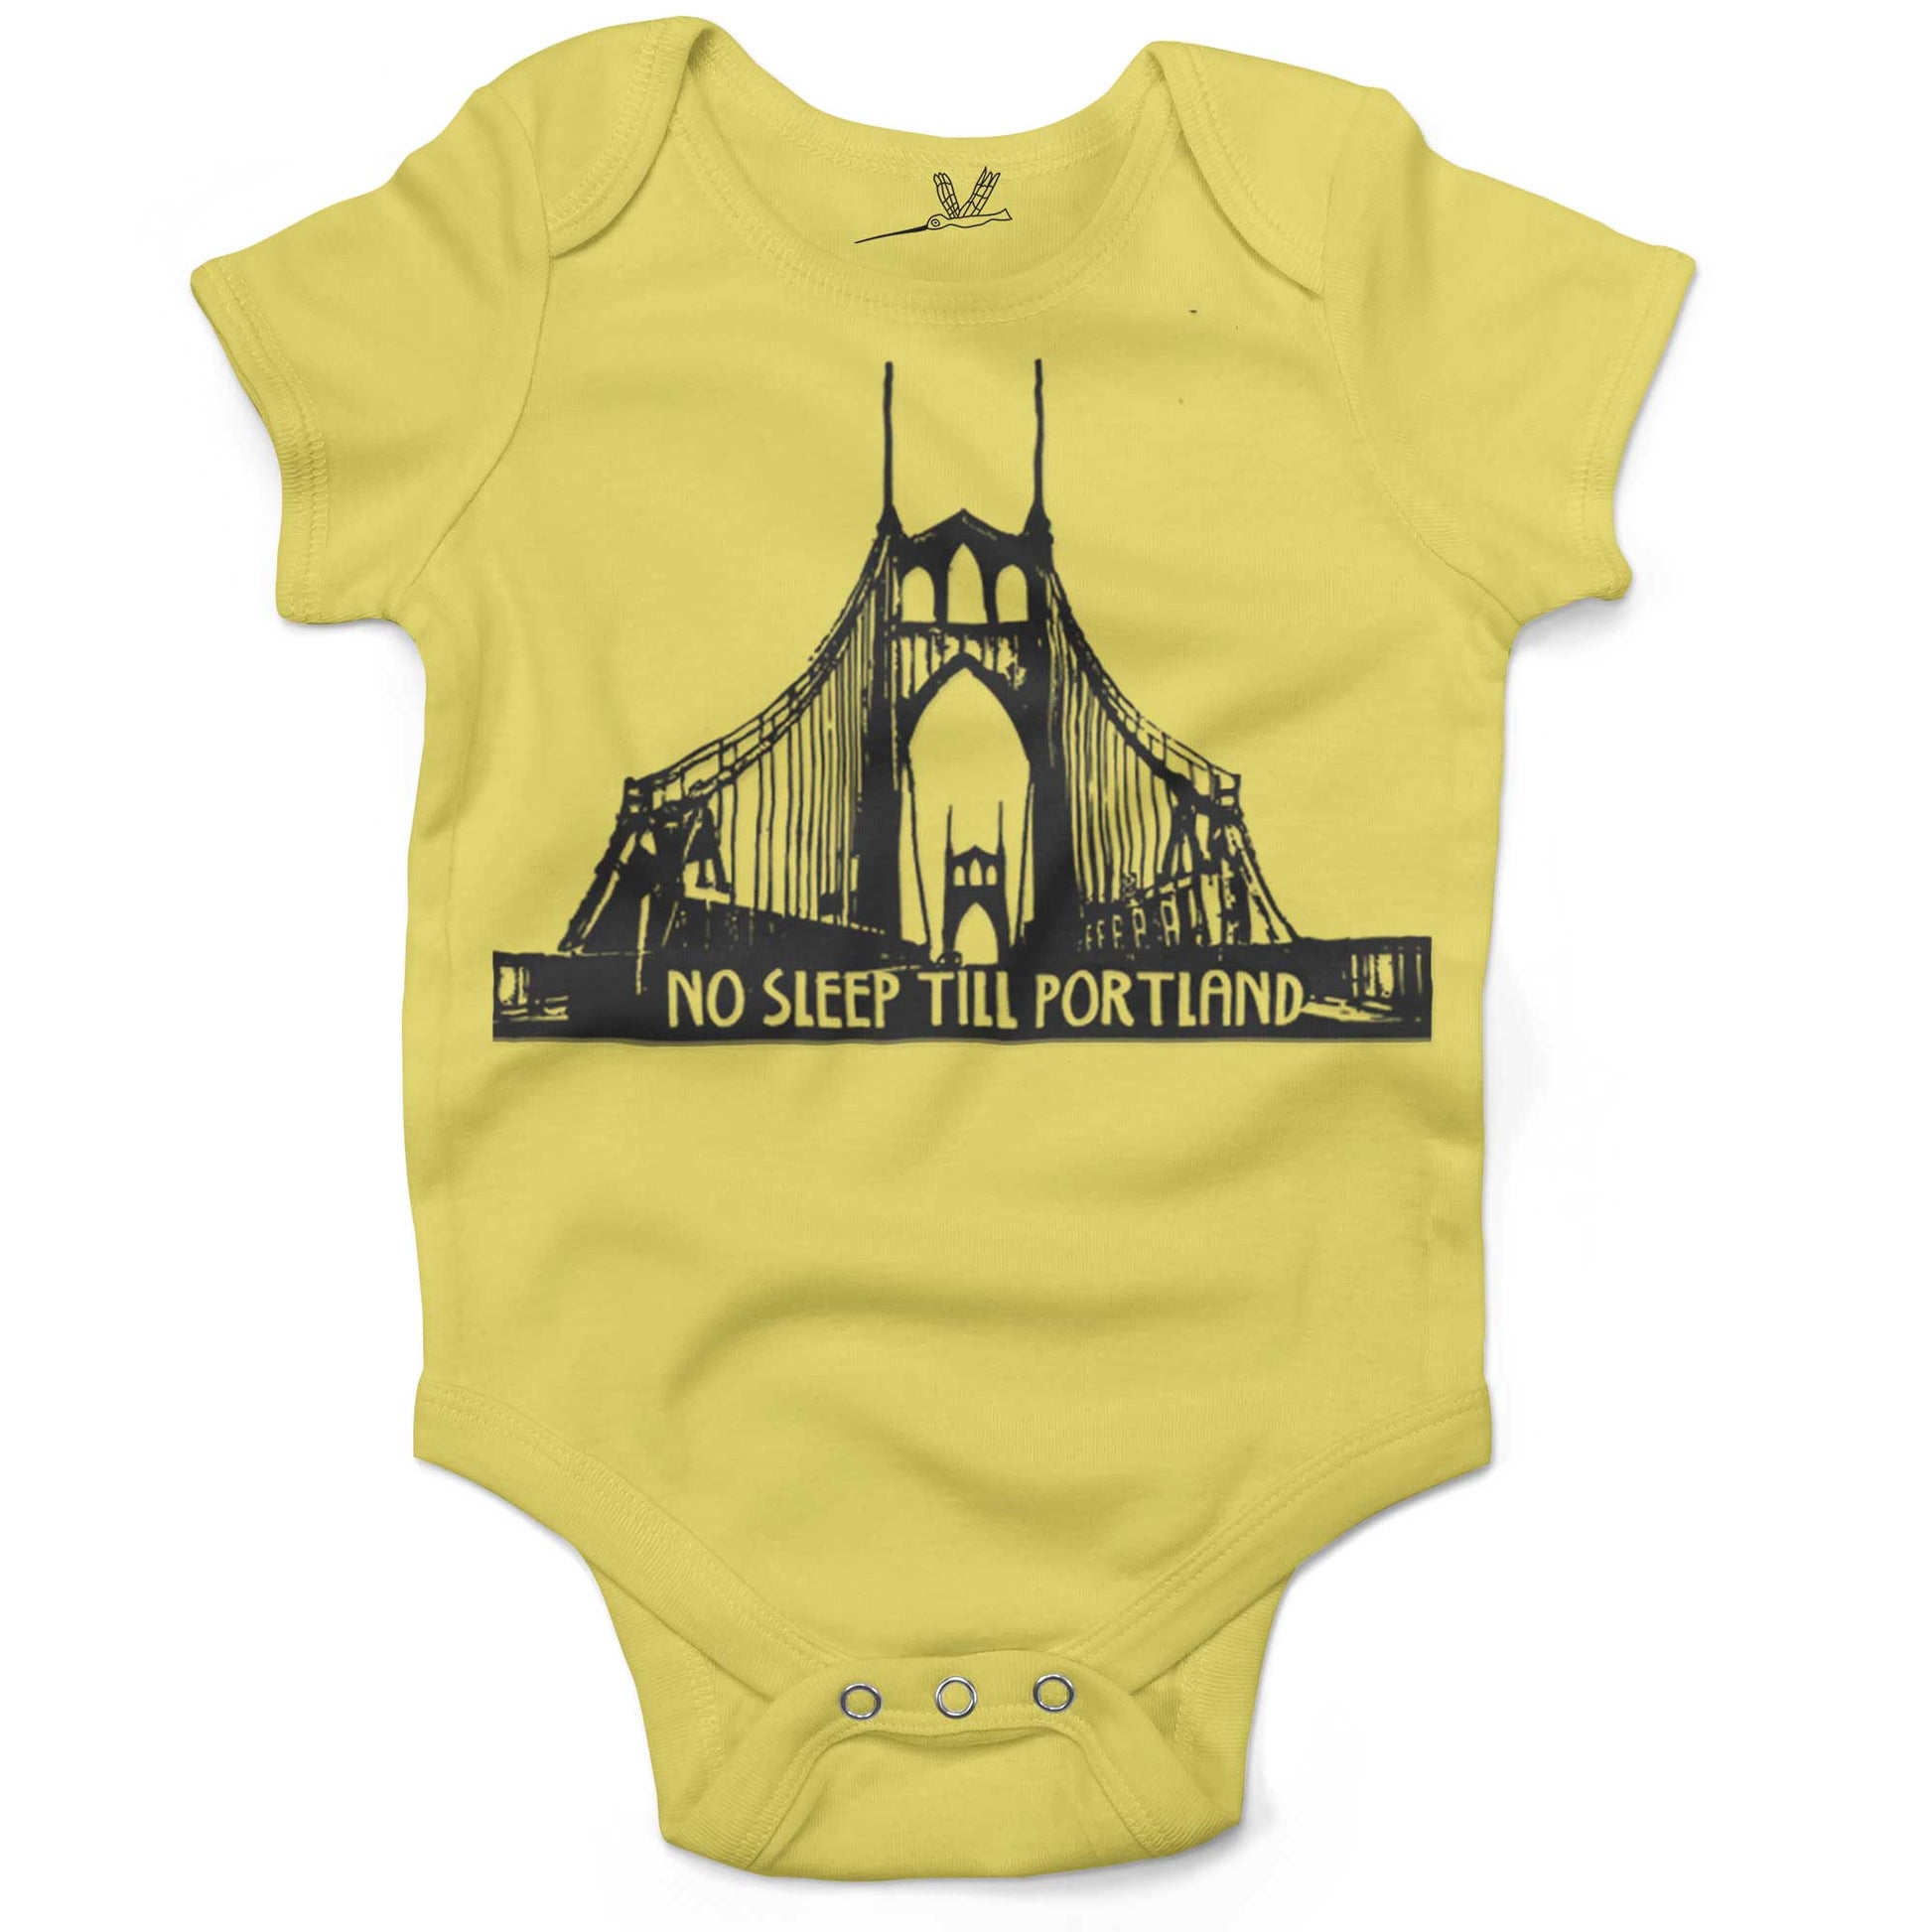 No Sleep Till Portland Infant Bodysuit or Raglan Baby Tee-Yellow-3-6 months